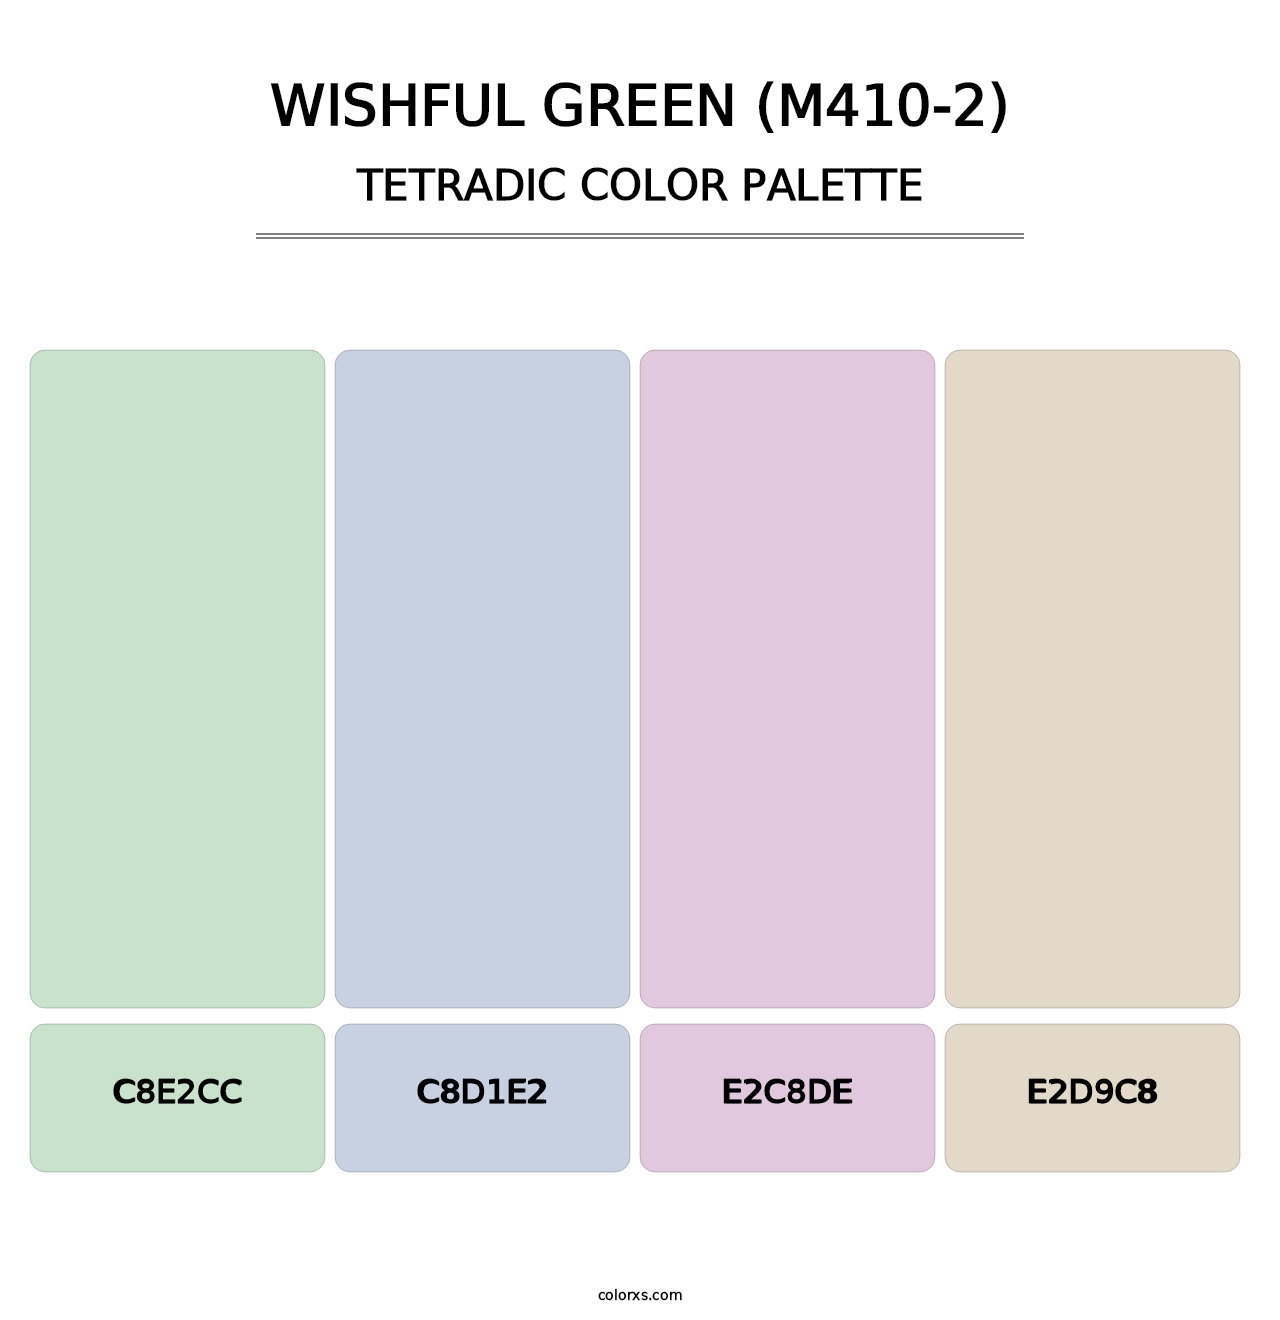 Wishful Green (M410-2) - Tetradic Color Palette